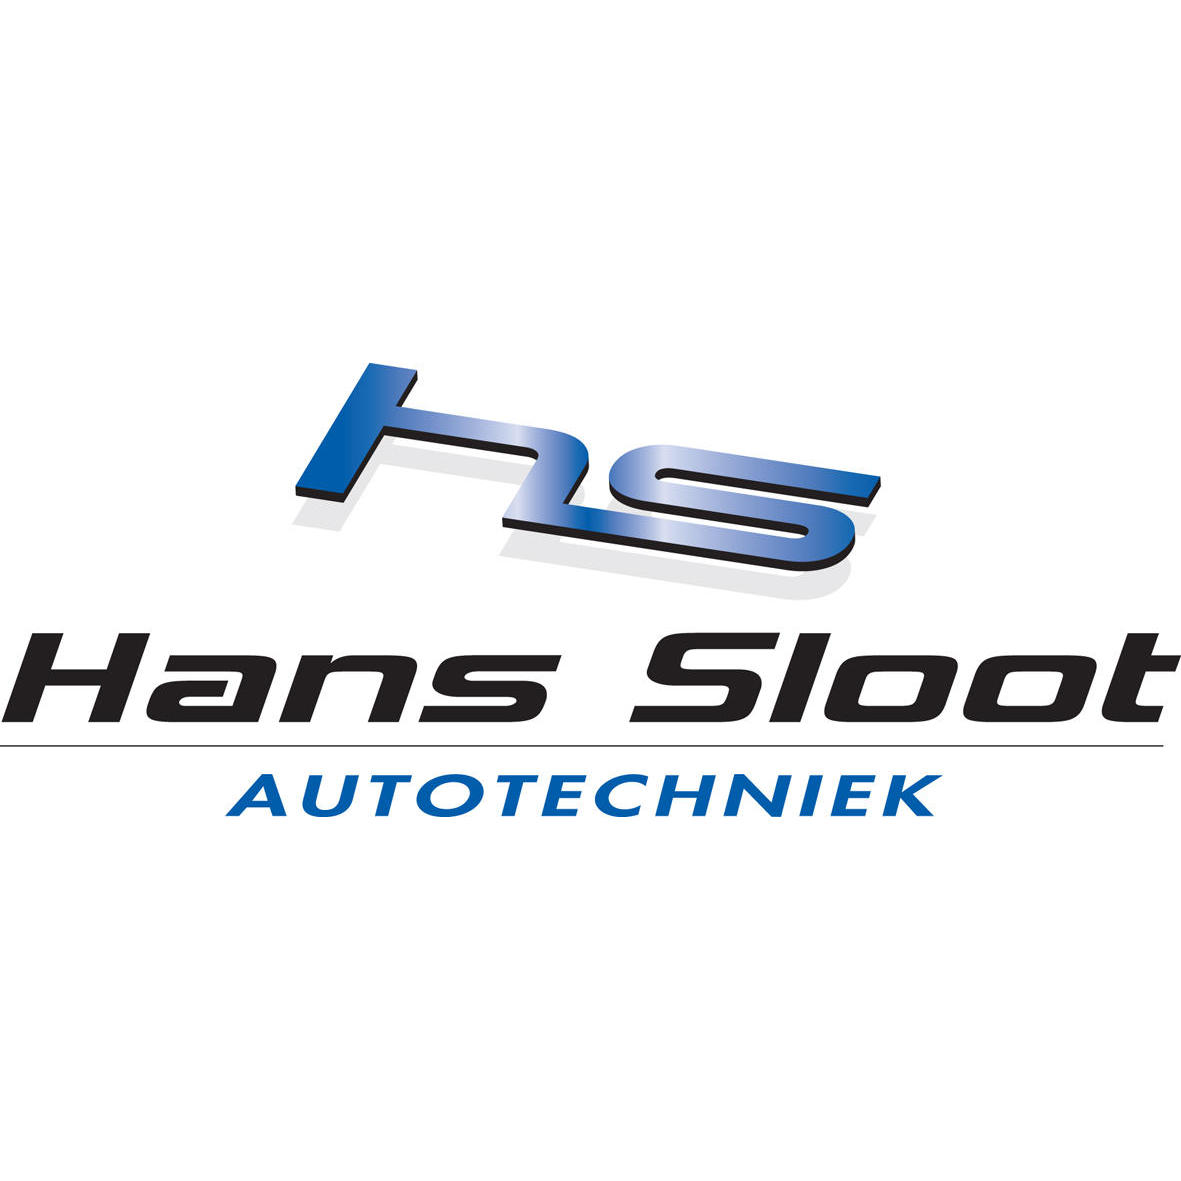 Autotechniek Hans Sloot - Auto Repair Shop - Lochem - 0573 252 837 Netherlands | ShowMeLocal.com